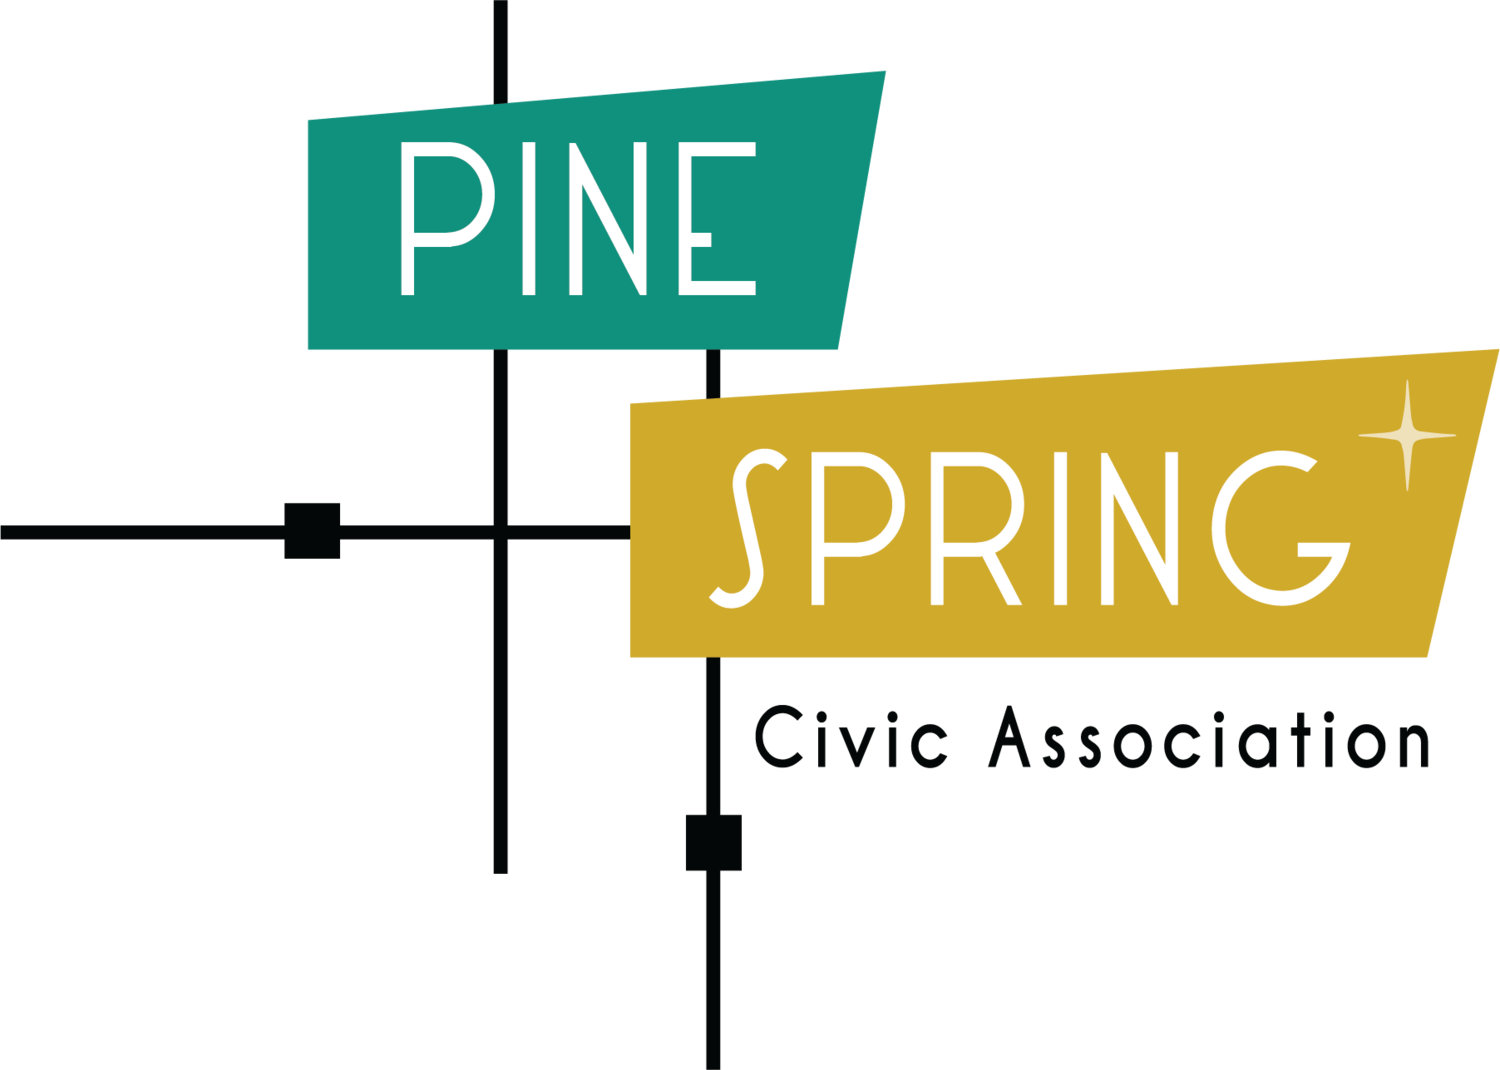 Pine Spring Civic Association